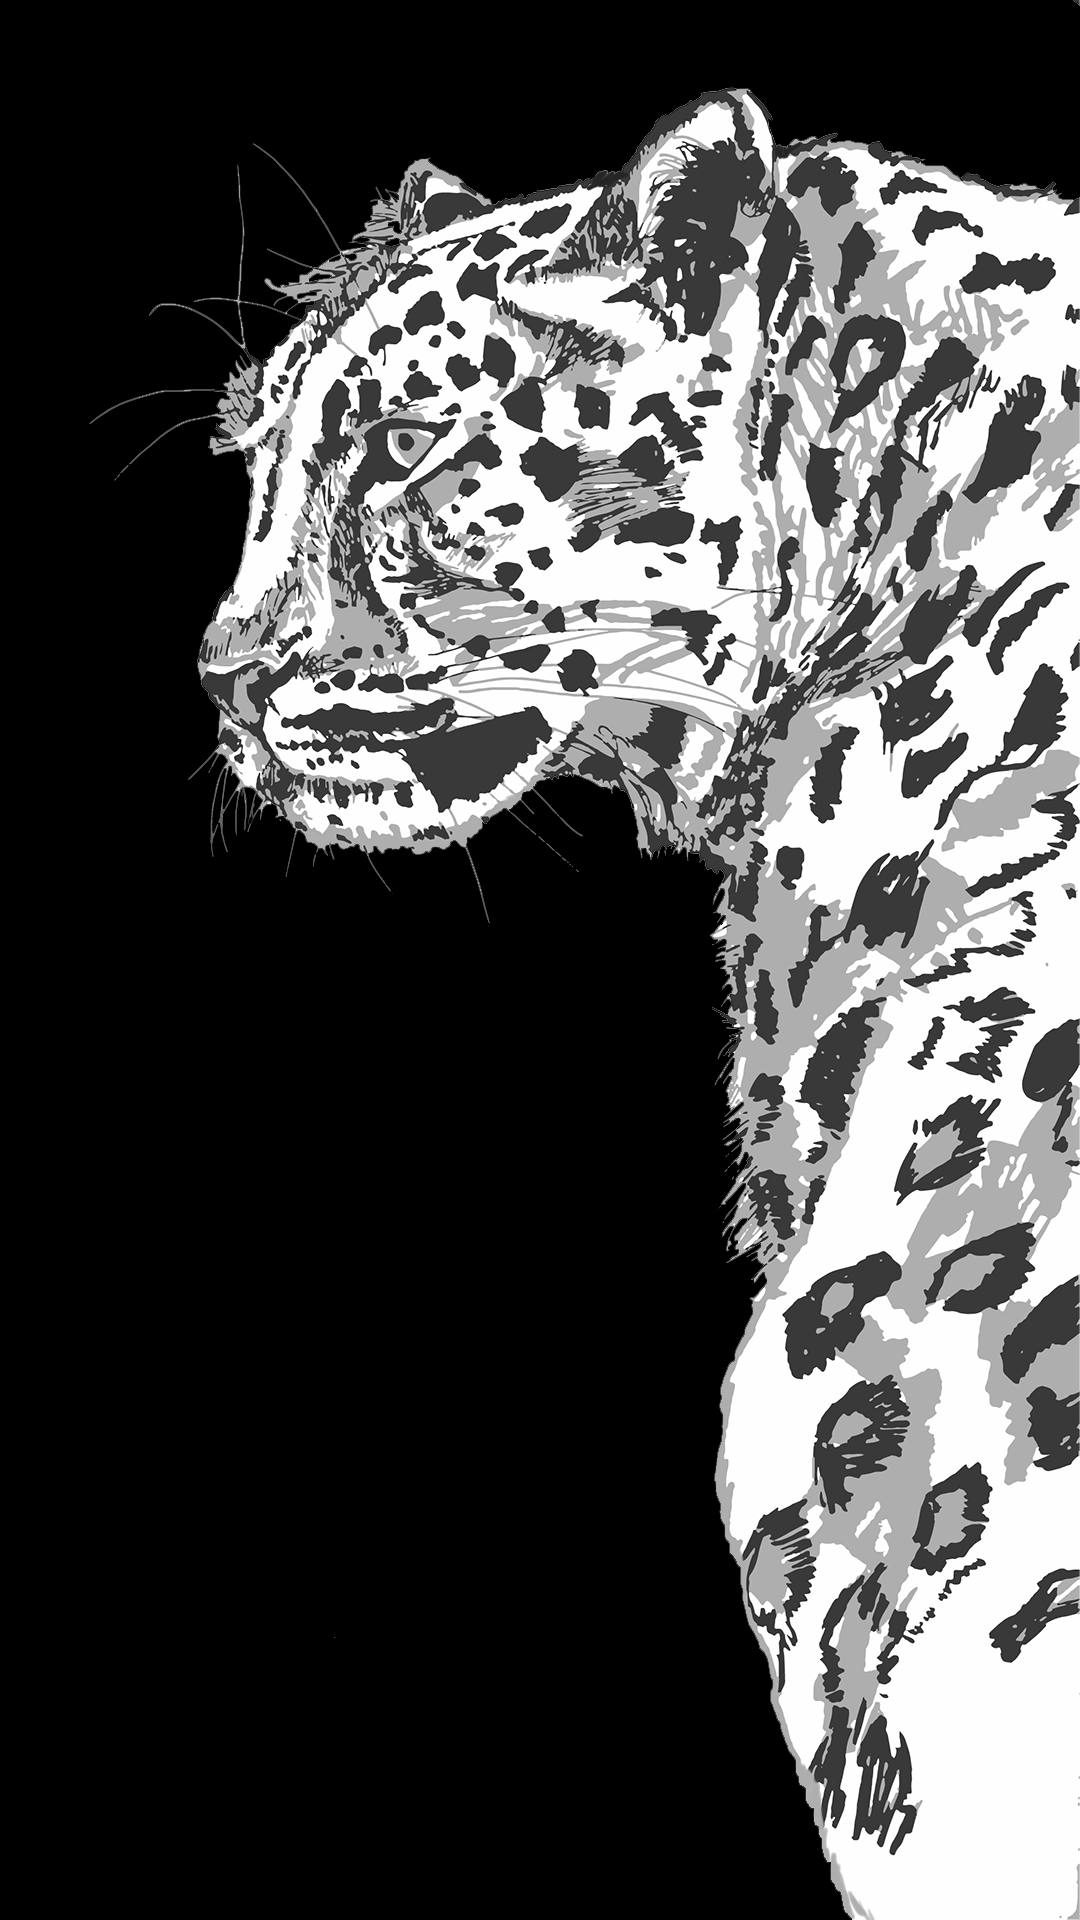 Leopard I drew, thought it'd make a nice wallpaper. 1920x1080